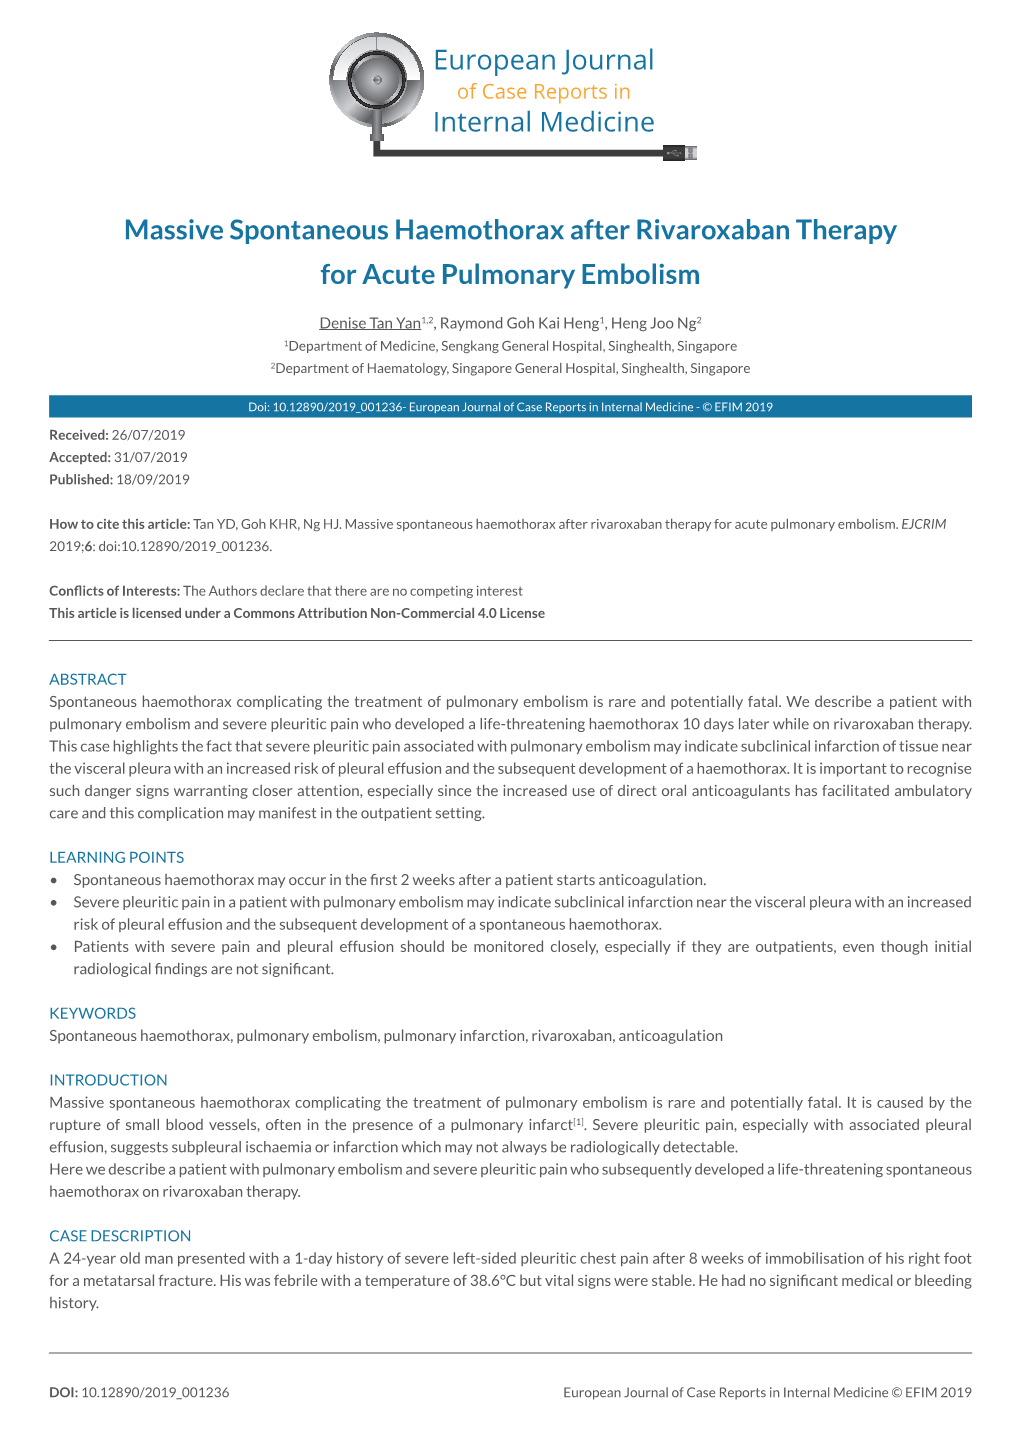 Massive Spontaneous Haemothorax After Rivaroxaban Therapy for Acute Pulmonary Embolism